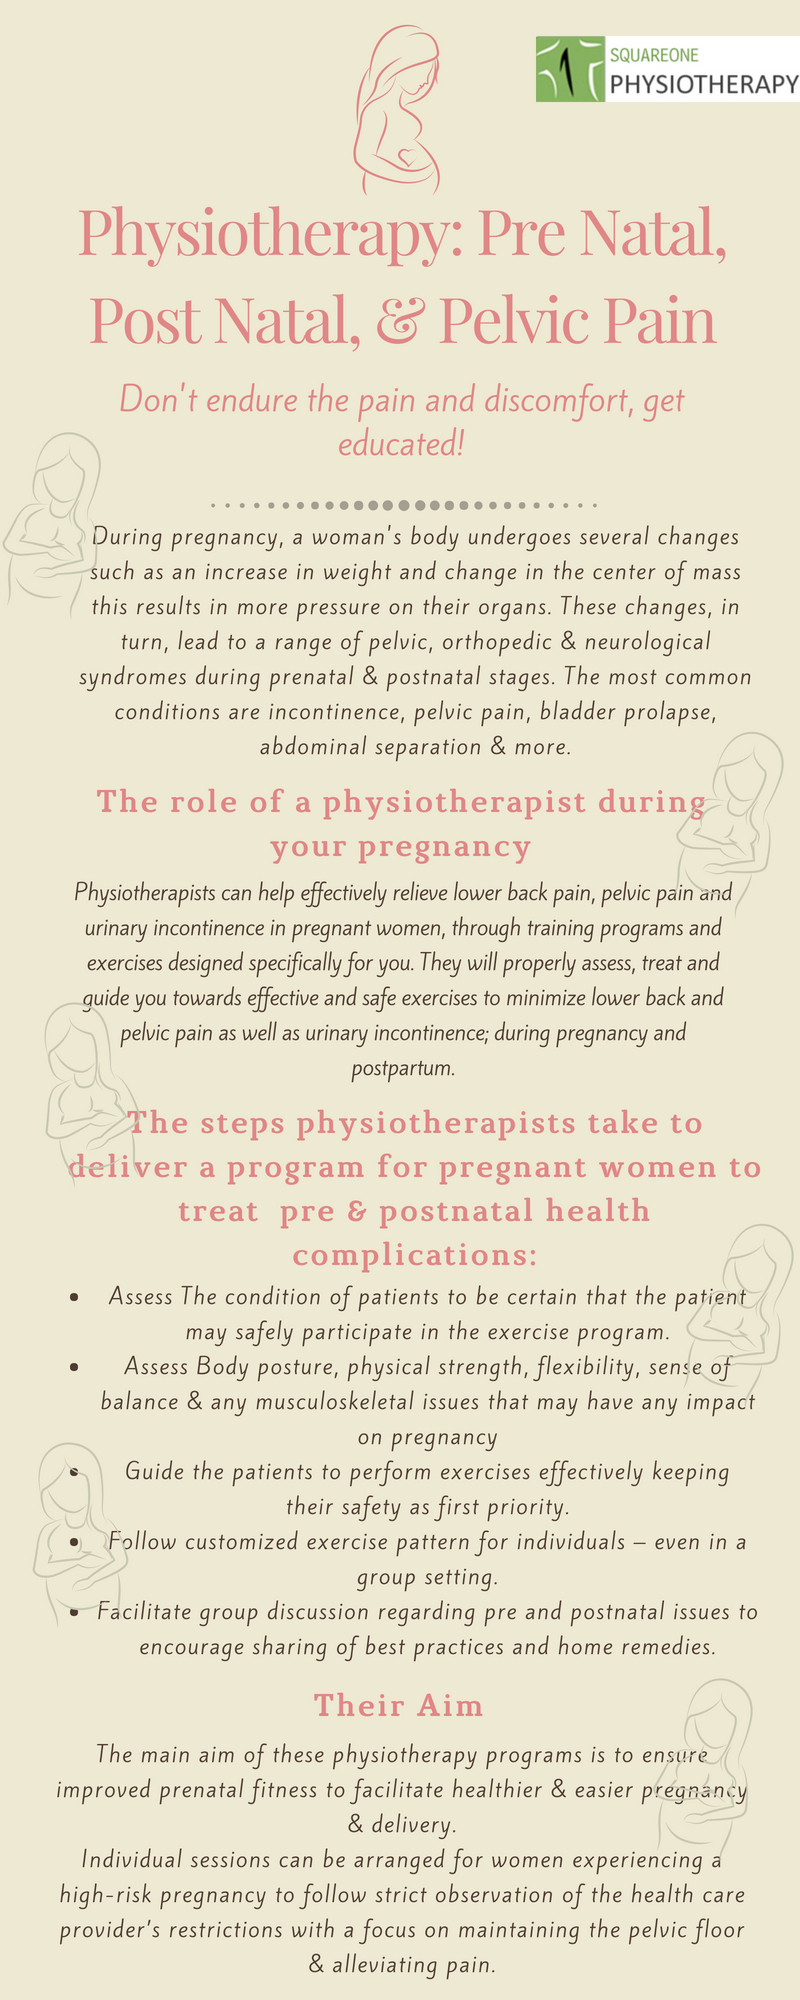 Treating Postpartum Pain: Back, Pelvic & More